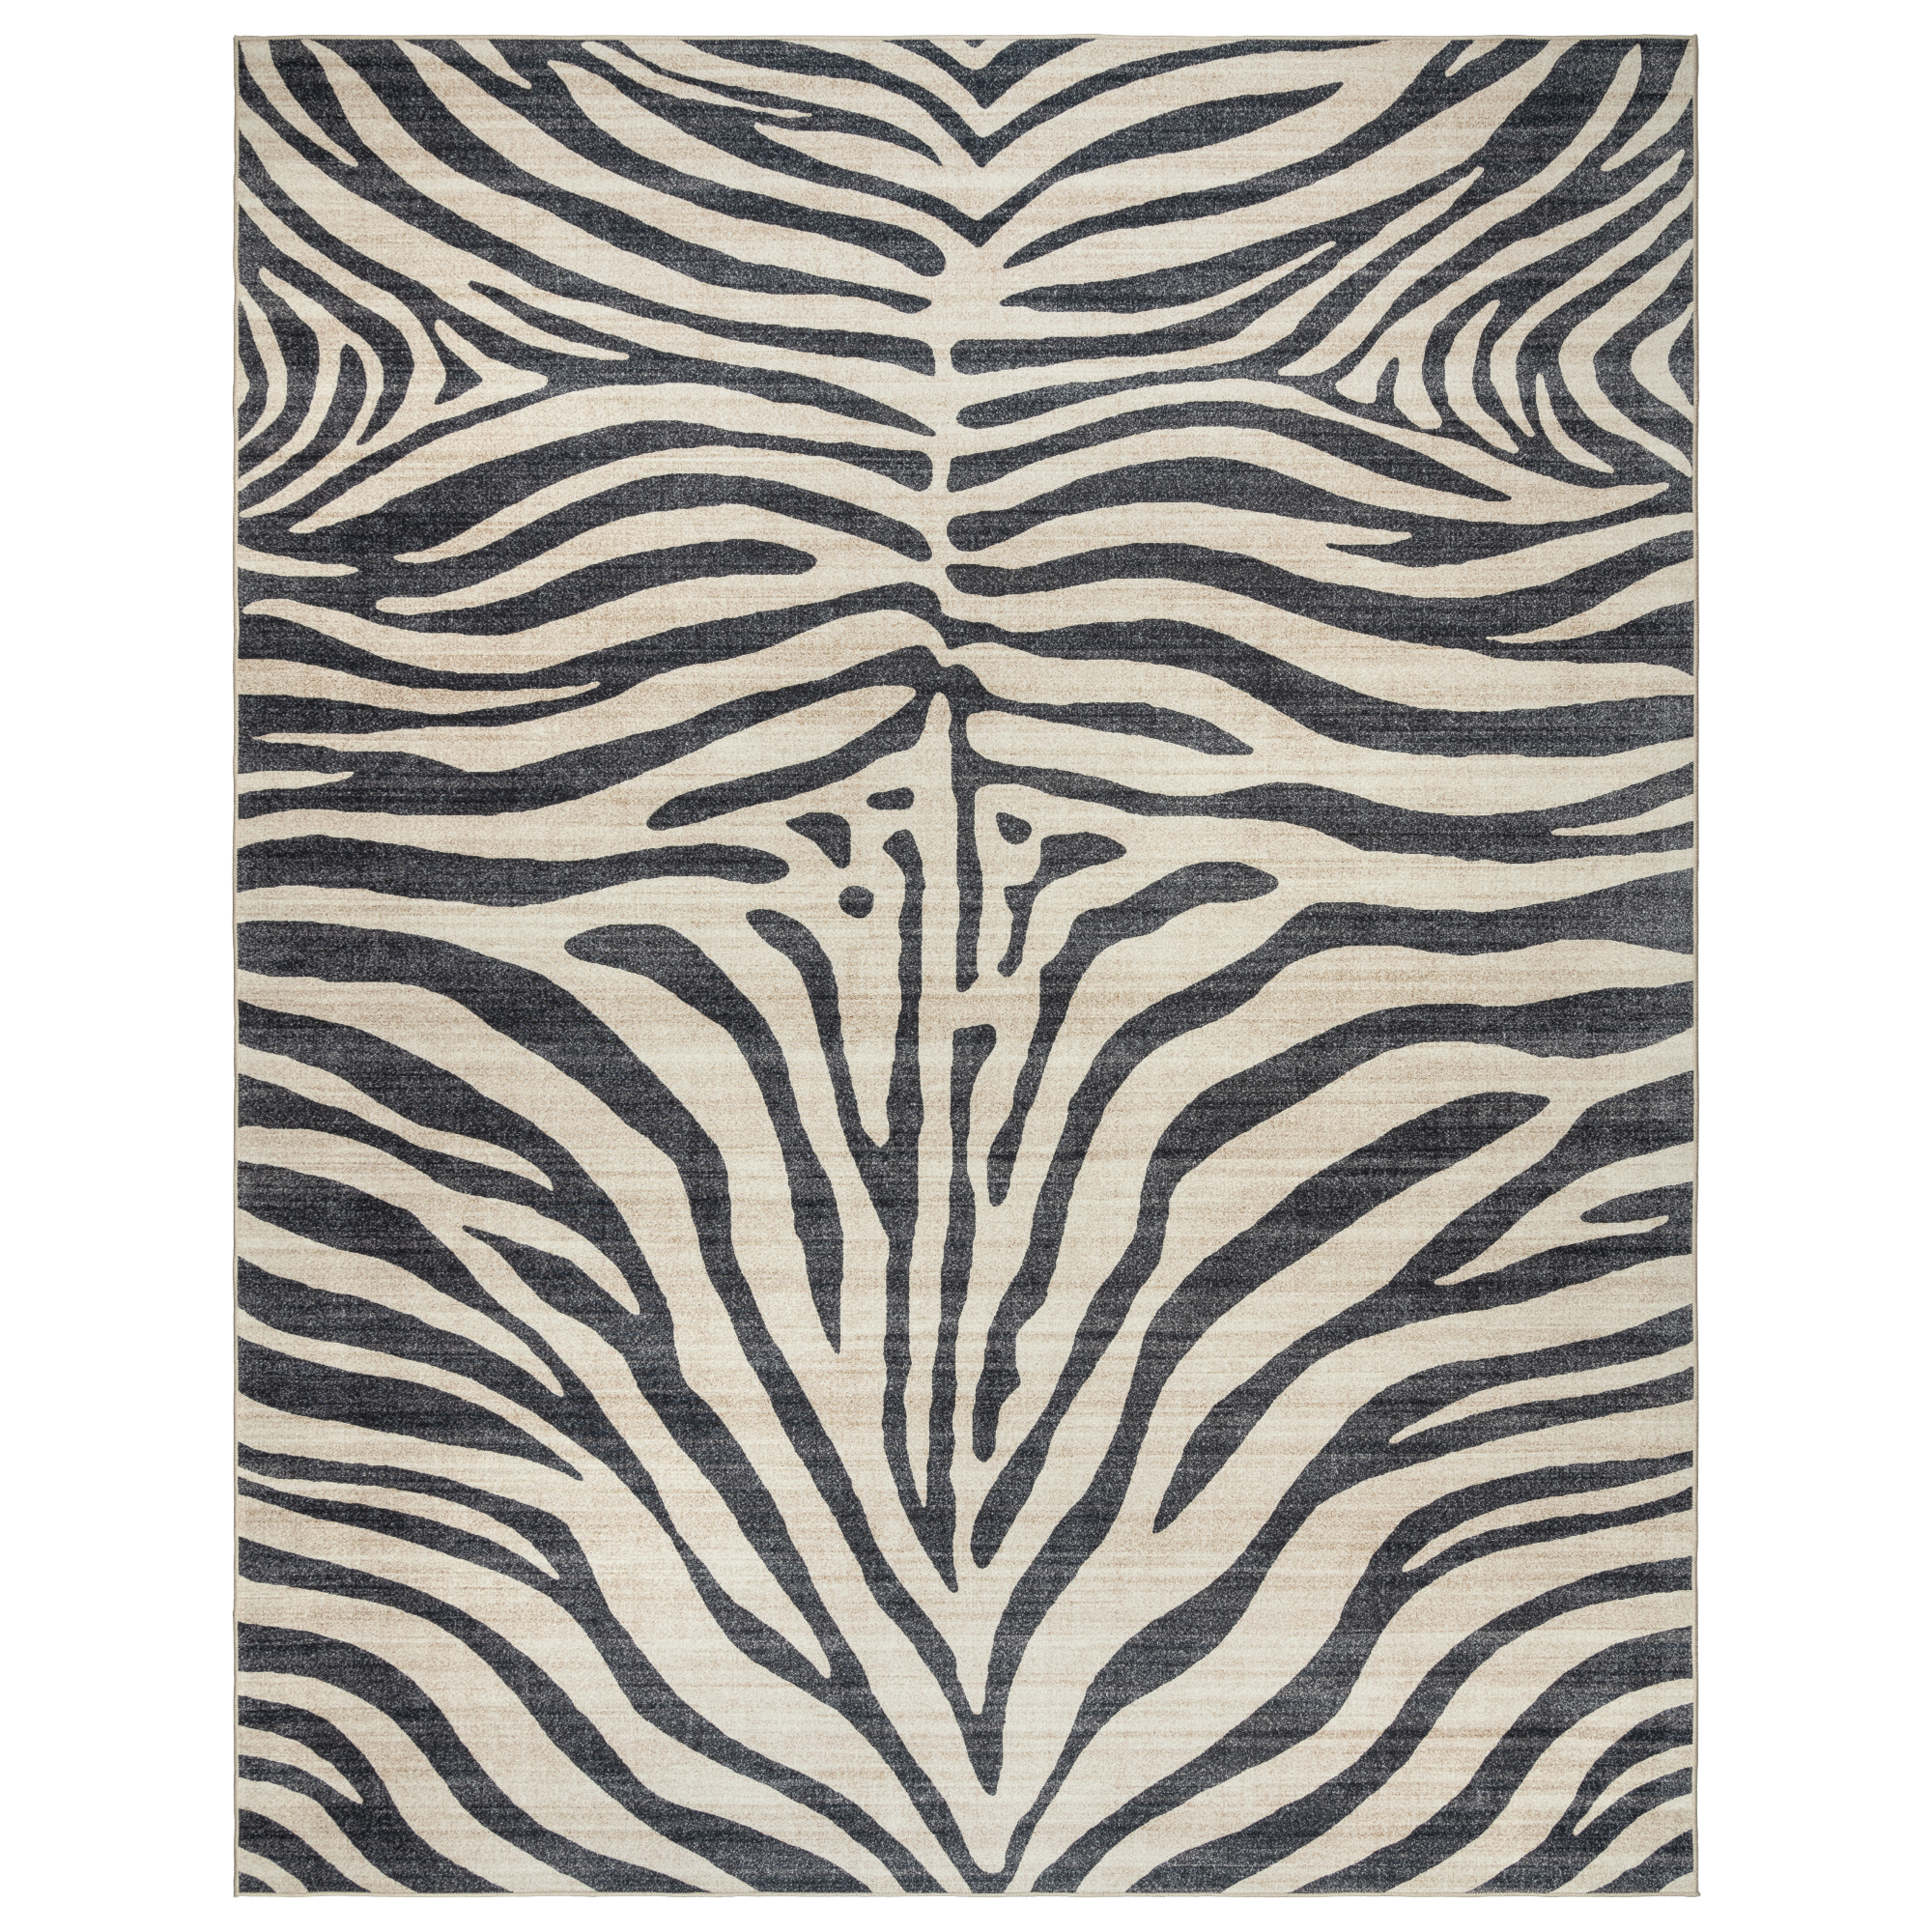 Crystal Print Zebra Washable Modern Striped Black White Rectangular Indoor Area Rug by Gertmenian, 8x10 - image 1 of 6